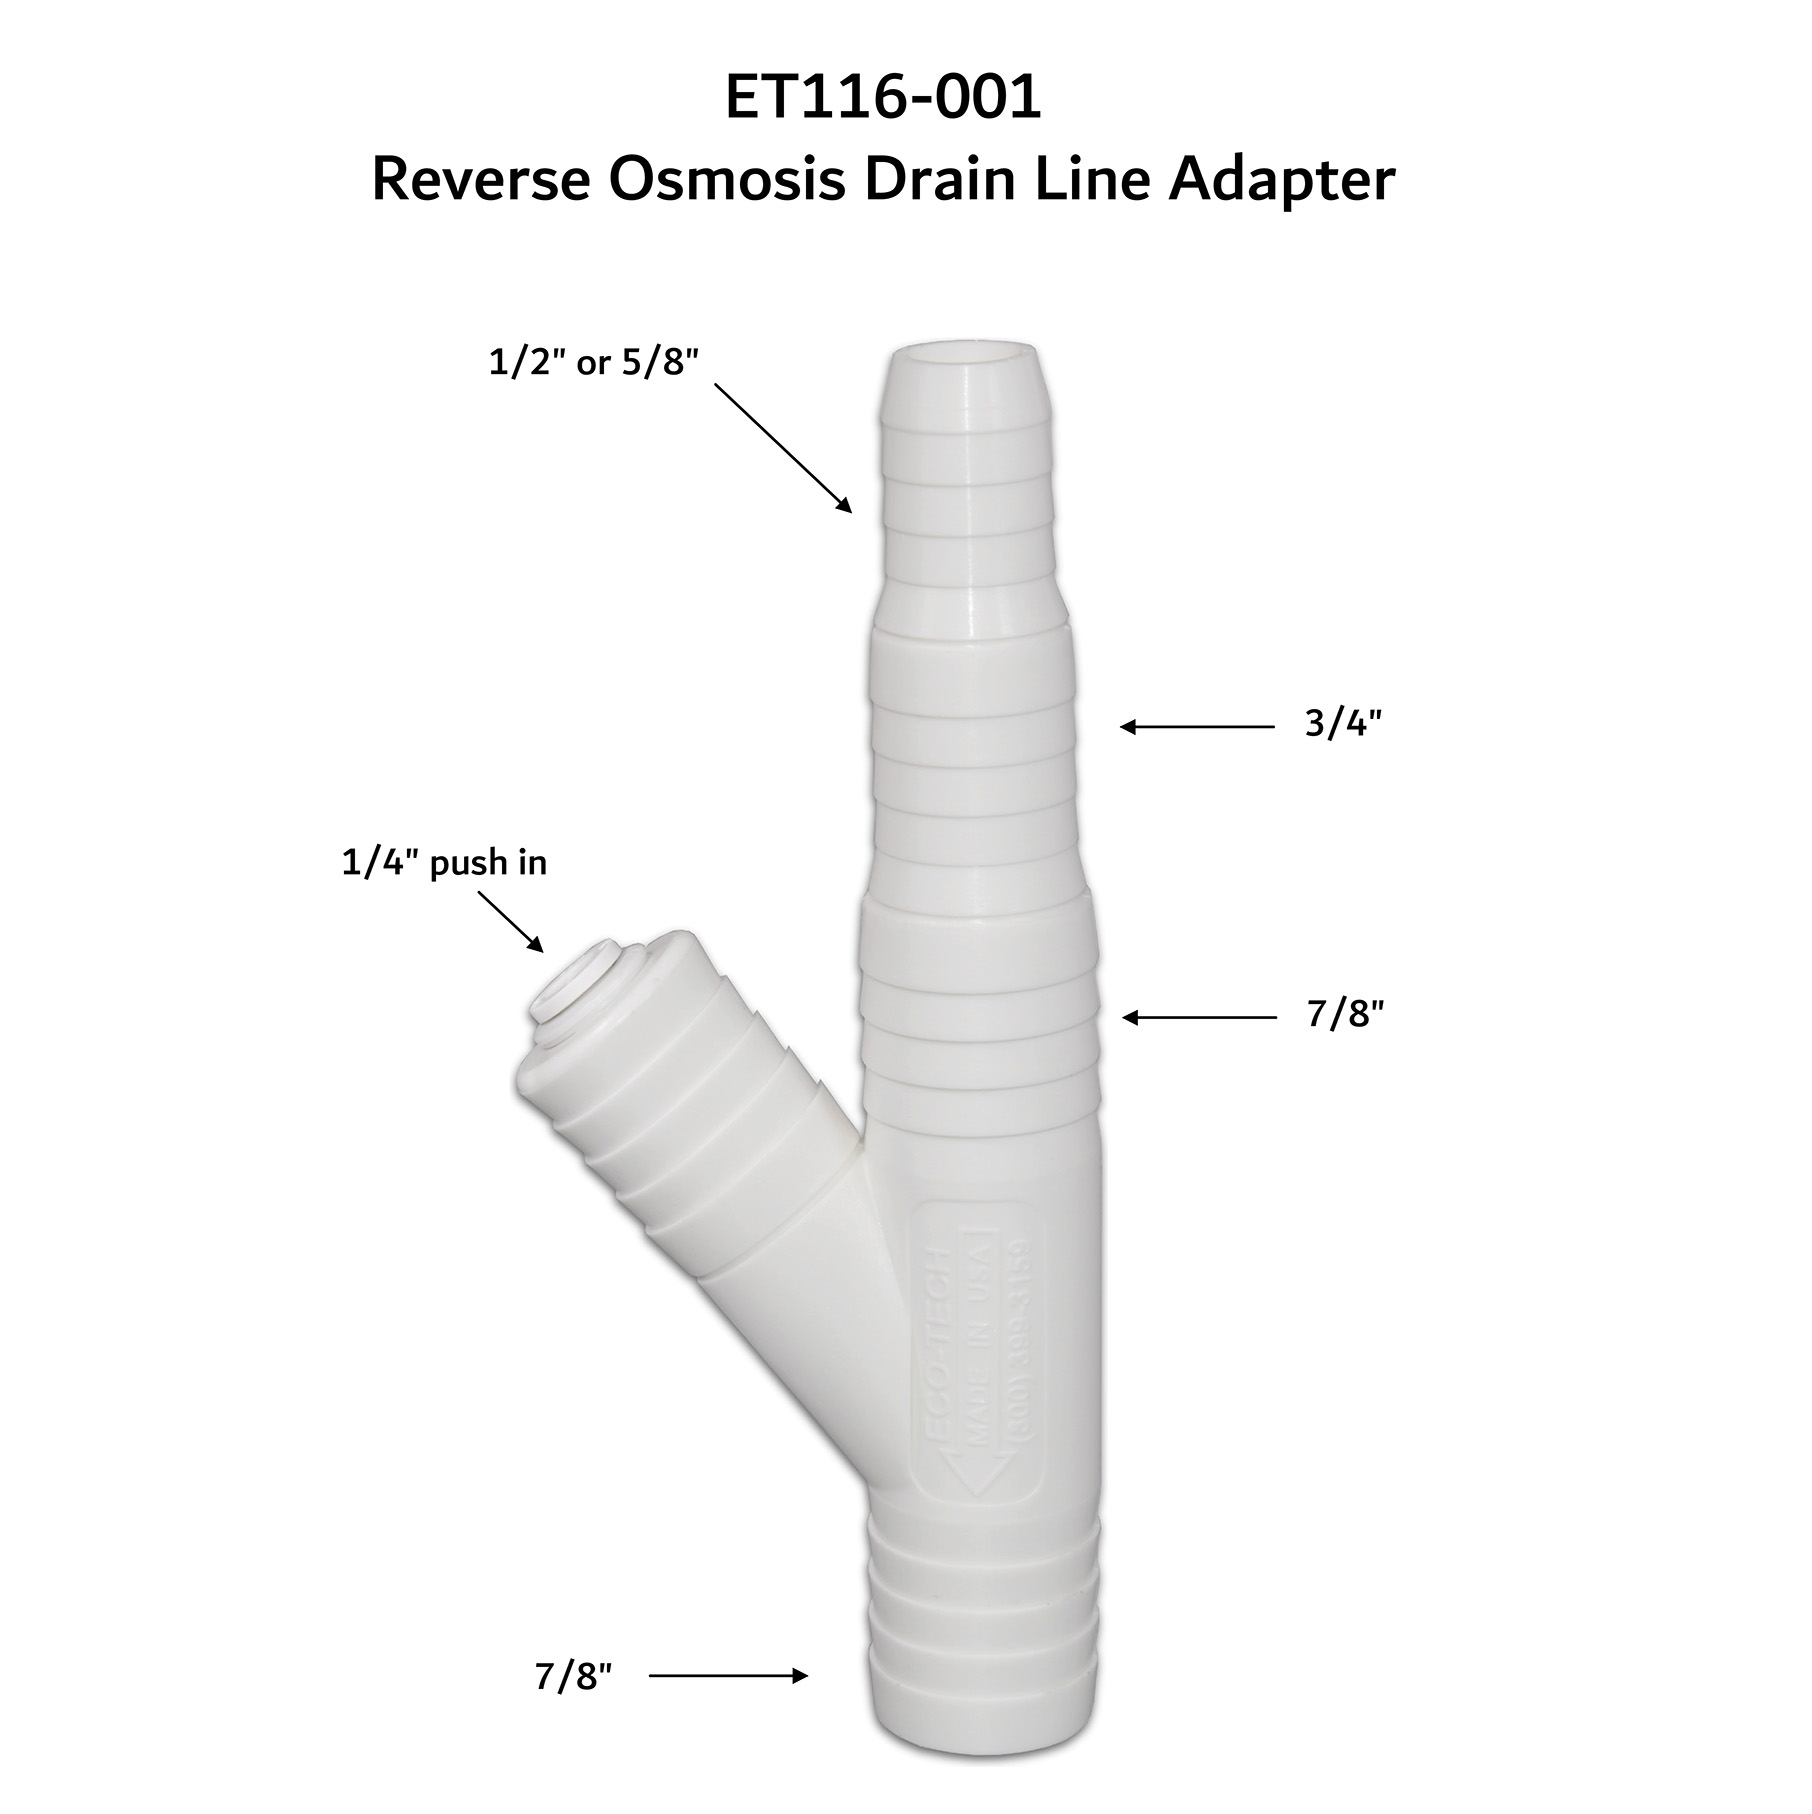 Reverse Osmosis Drain Line Adapter